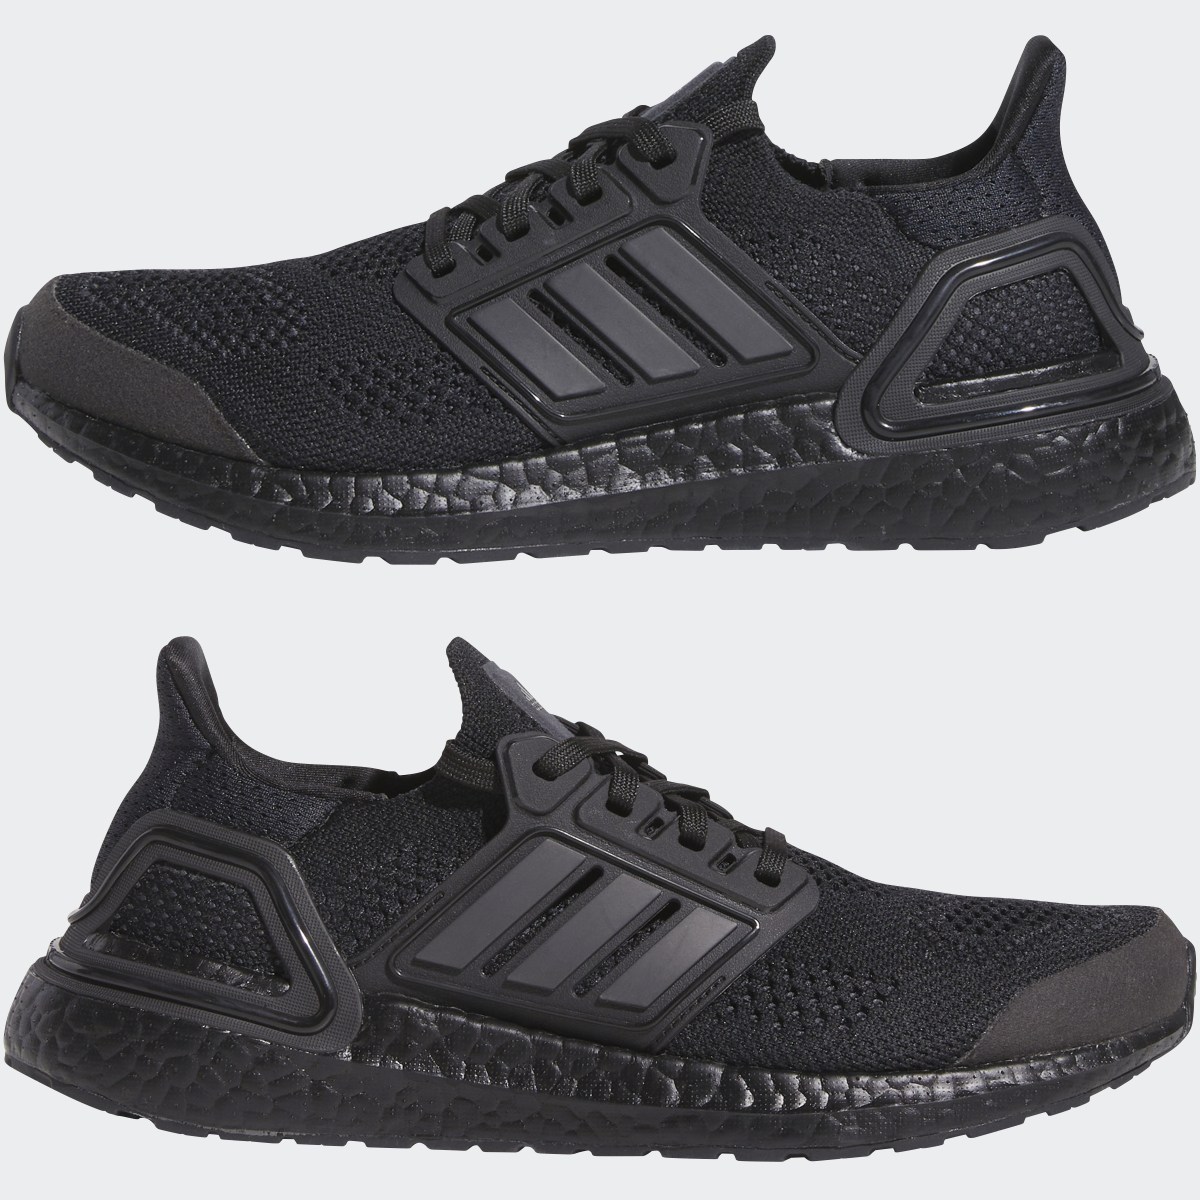 Adidas Ultraboost 19.5 DNA Running Sportswear Lifestyle Shoes. 8